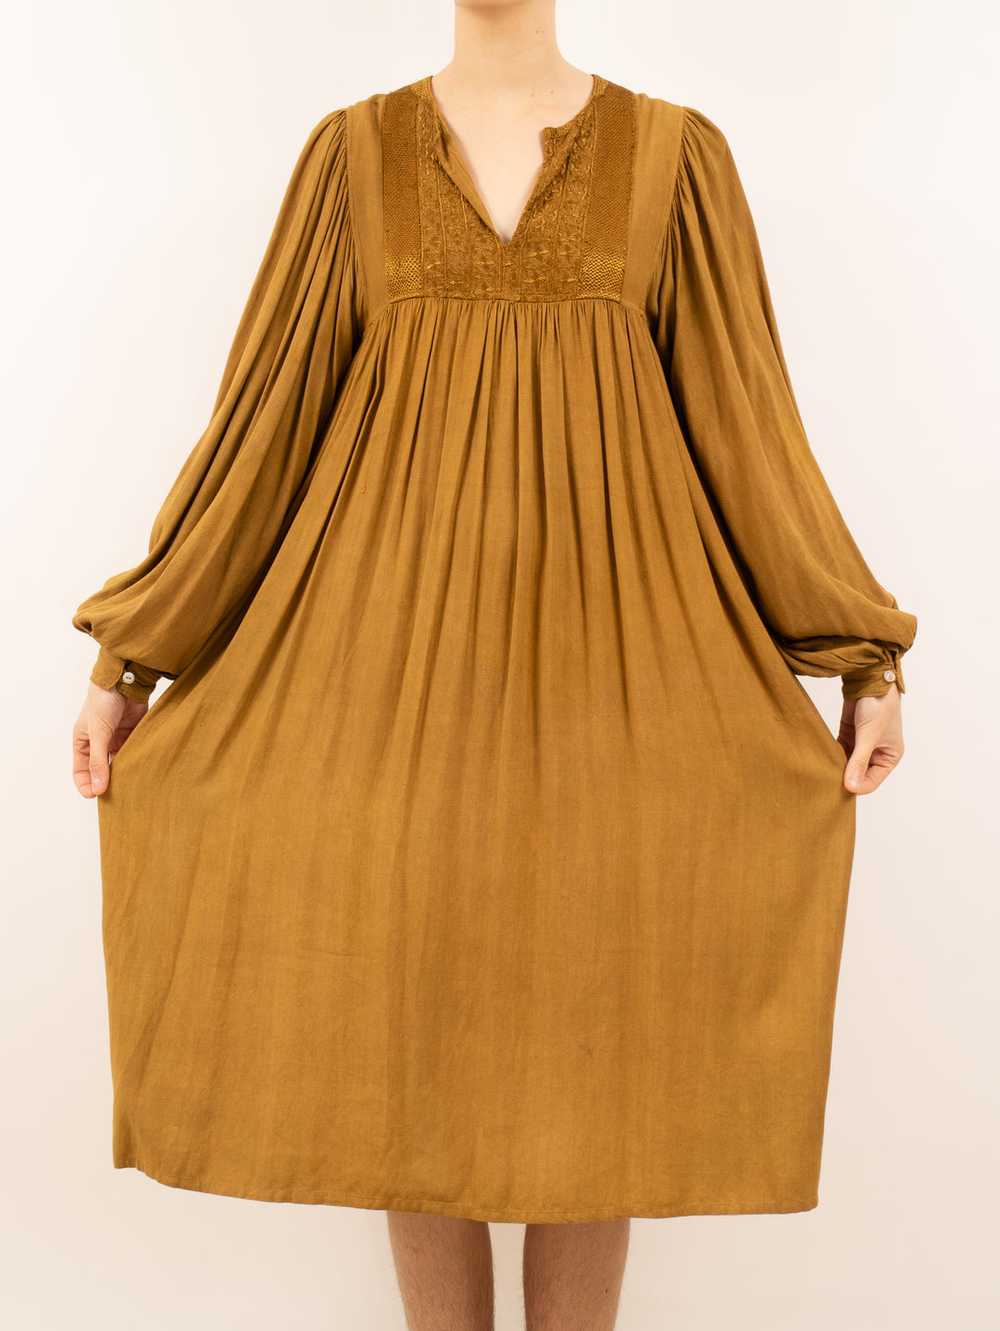 1970's golden caftan dress - image 4